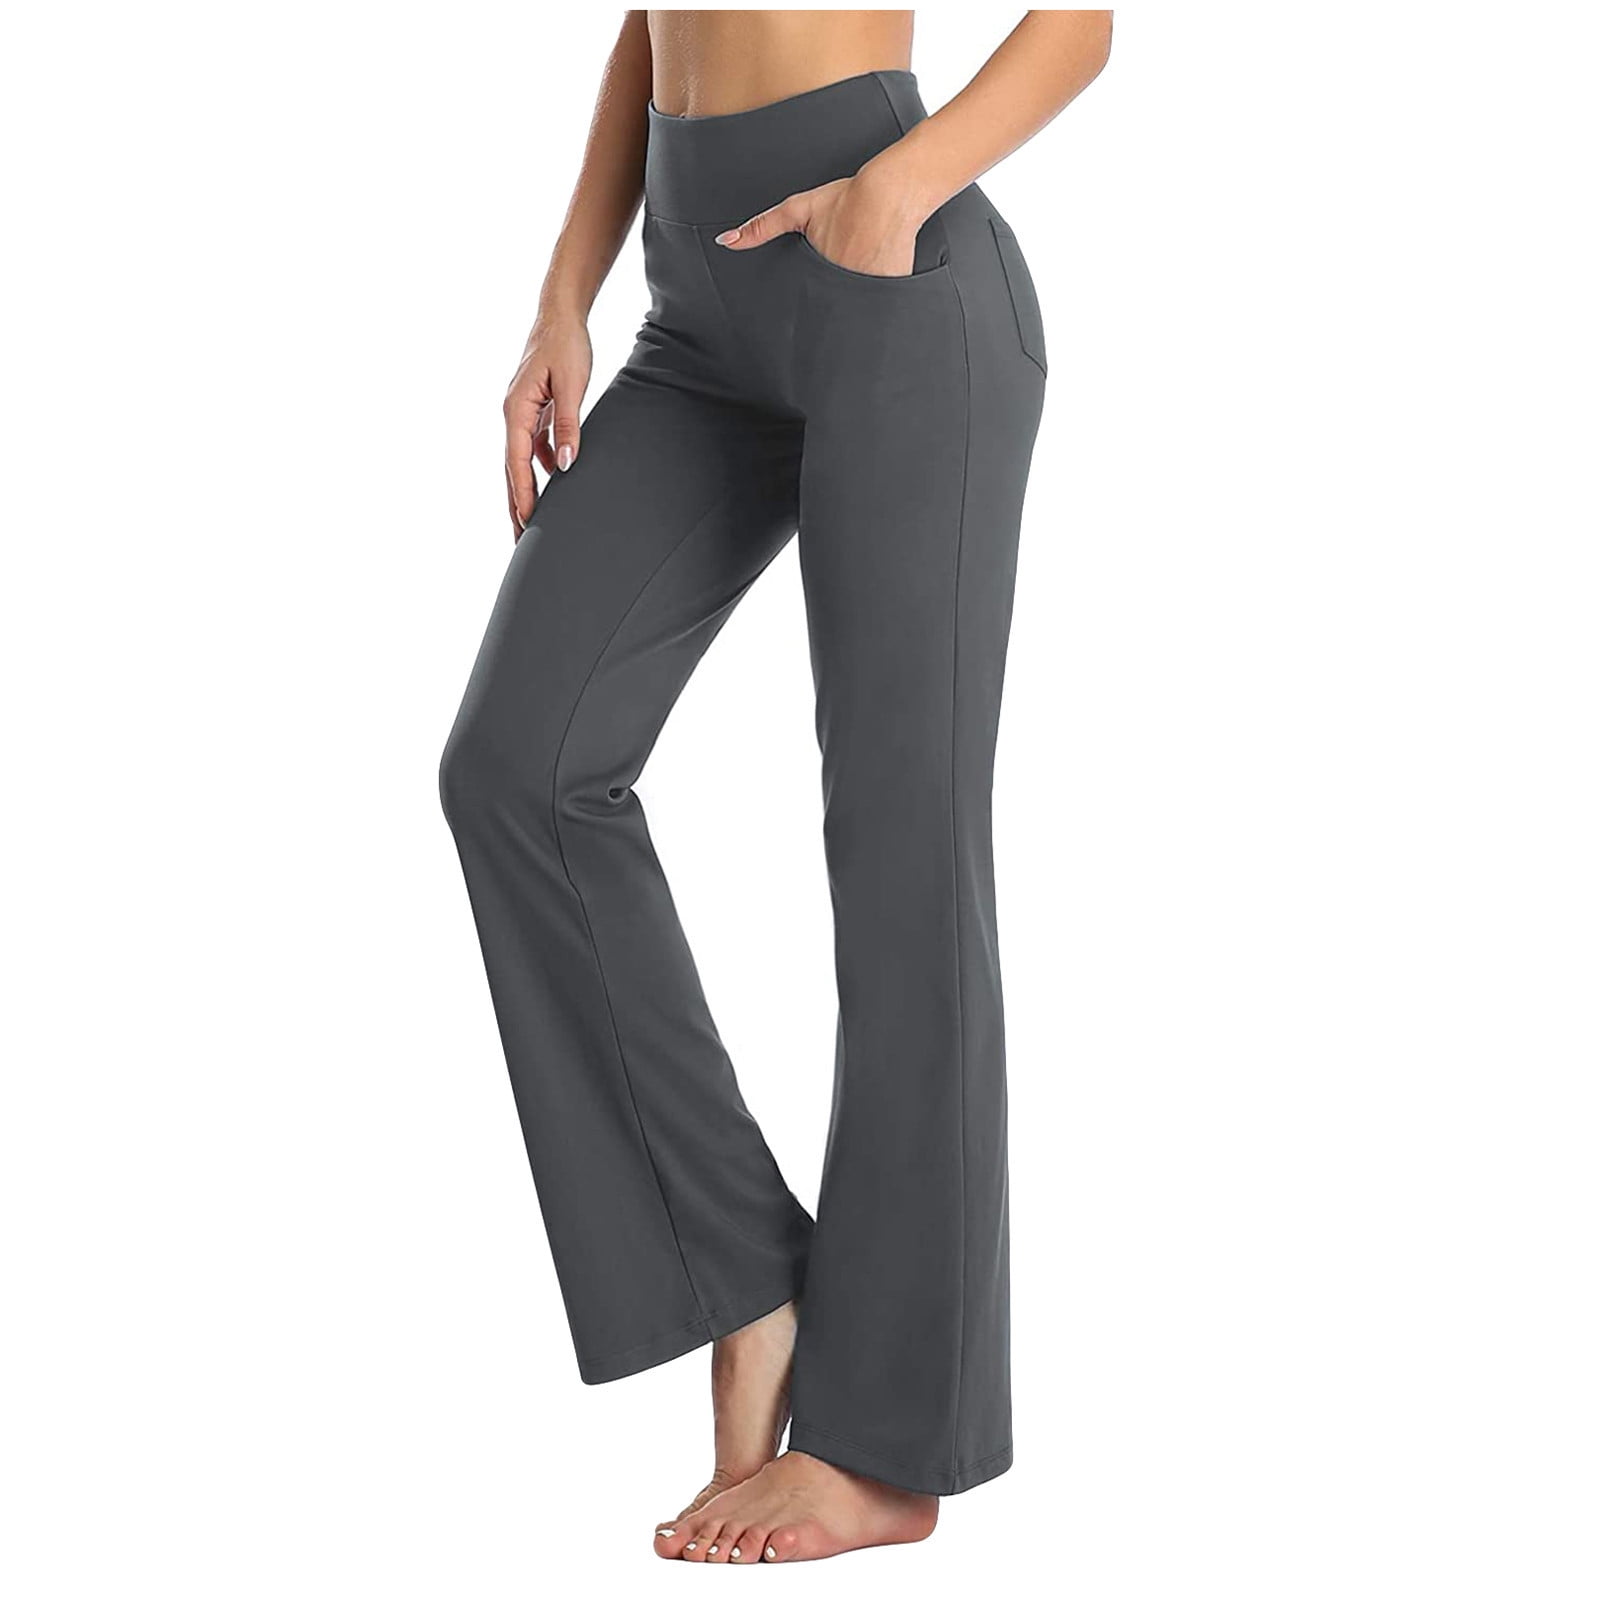 Hfyihgf Bootcut Yoga Pants with Pockets for Women Tummy Control Workout  Bootleg Work Pants High Waist Stretch Leggings(Dark Gray,XL) 